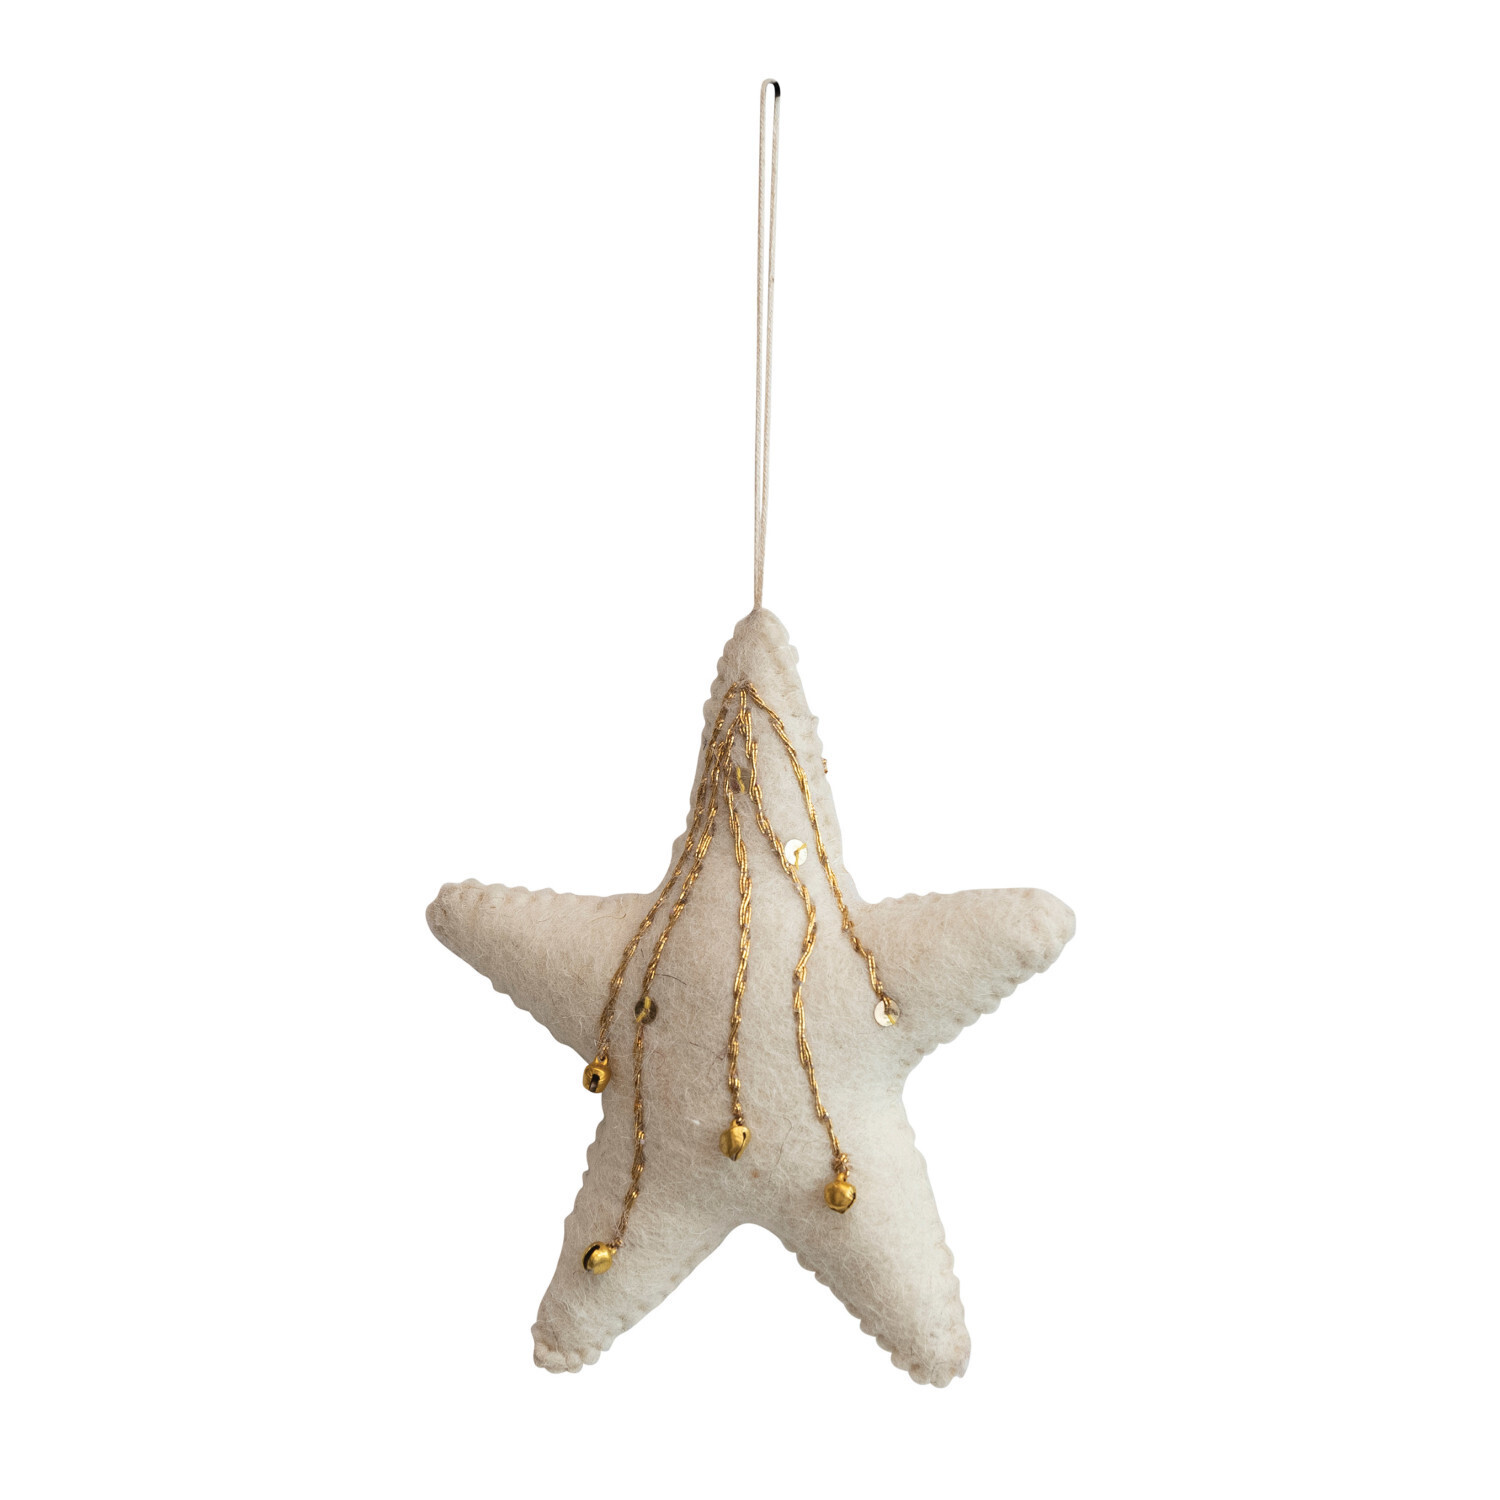 6"H Handmade Acrylic & Wool Felt Star Ornament w/ Embroidery & Bells